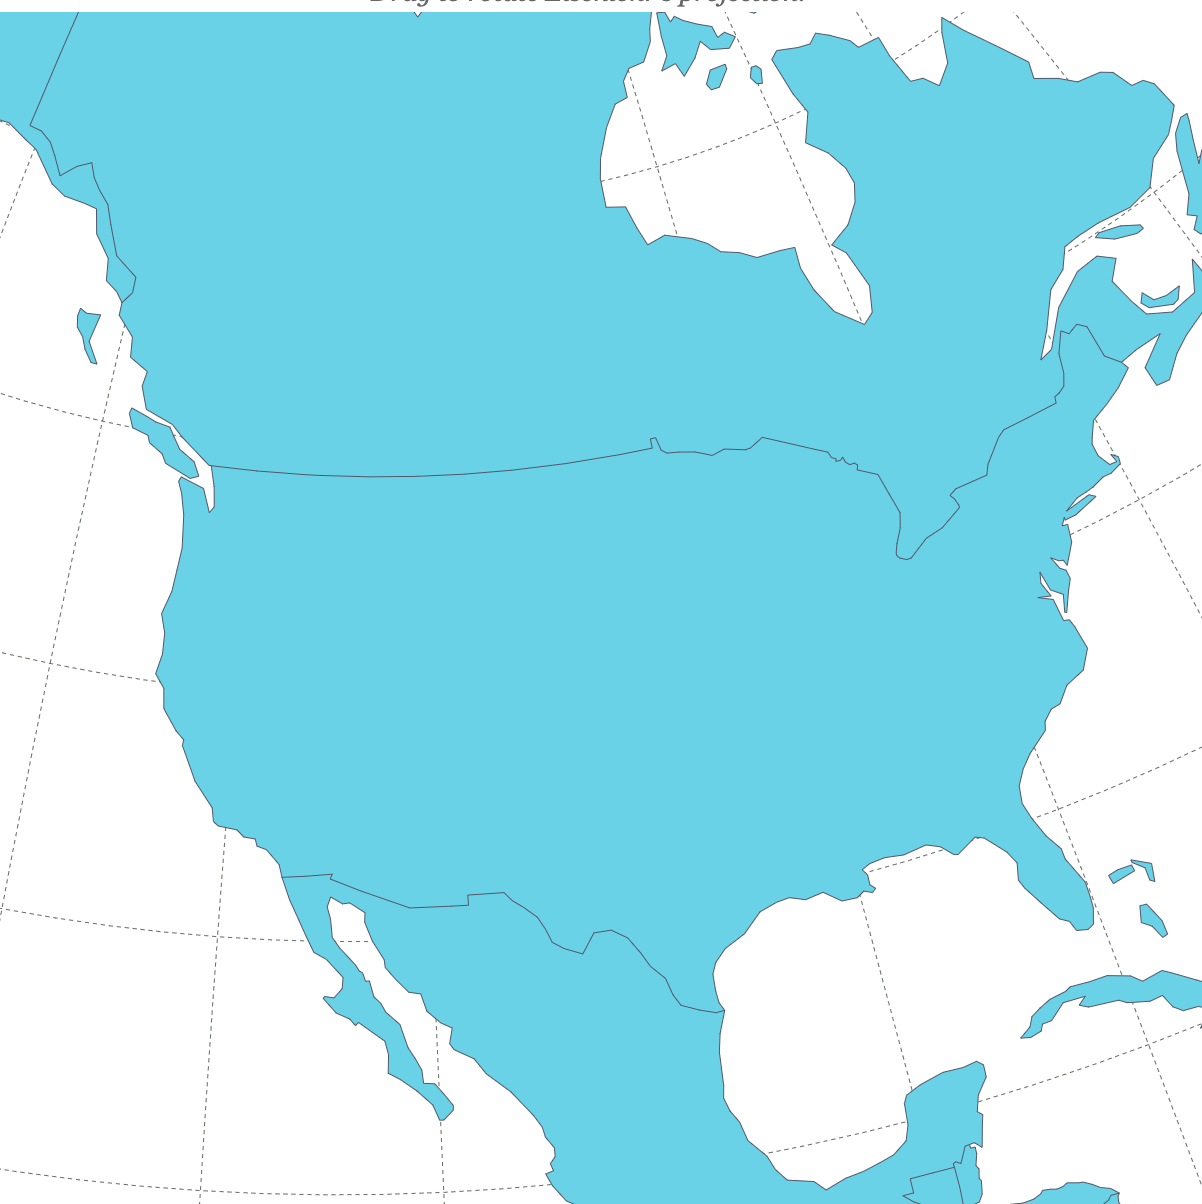 North America (3 areas)